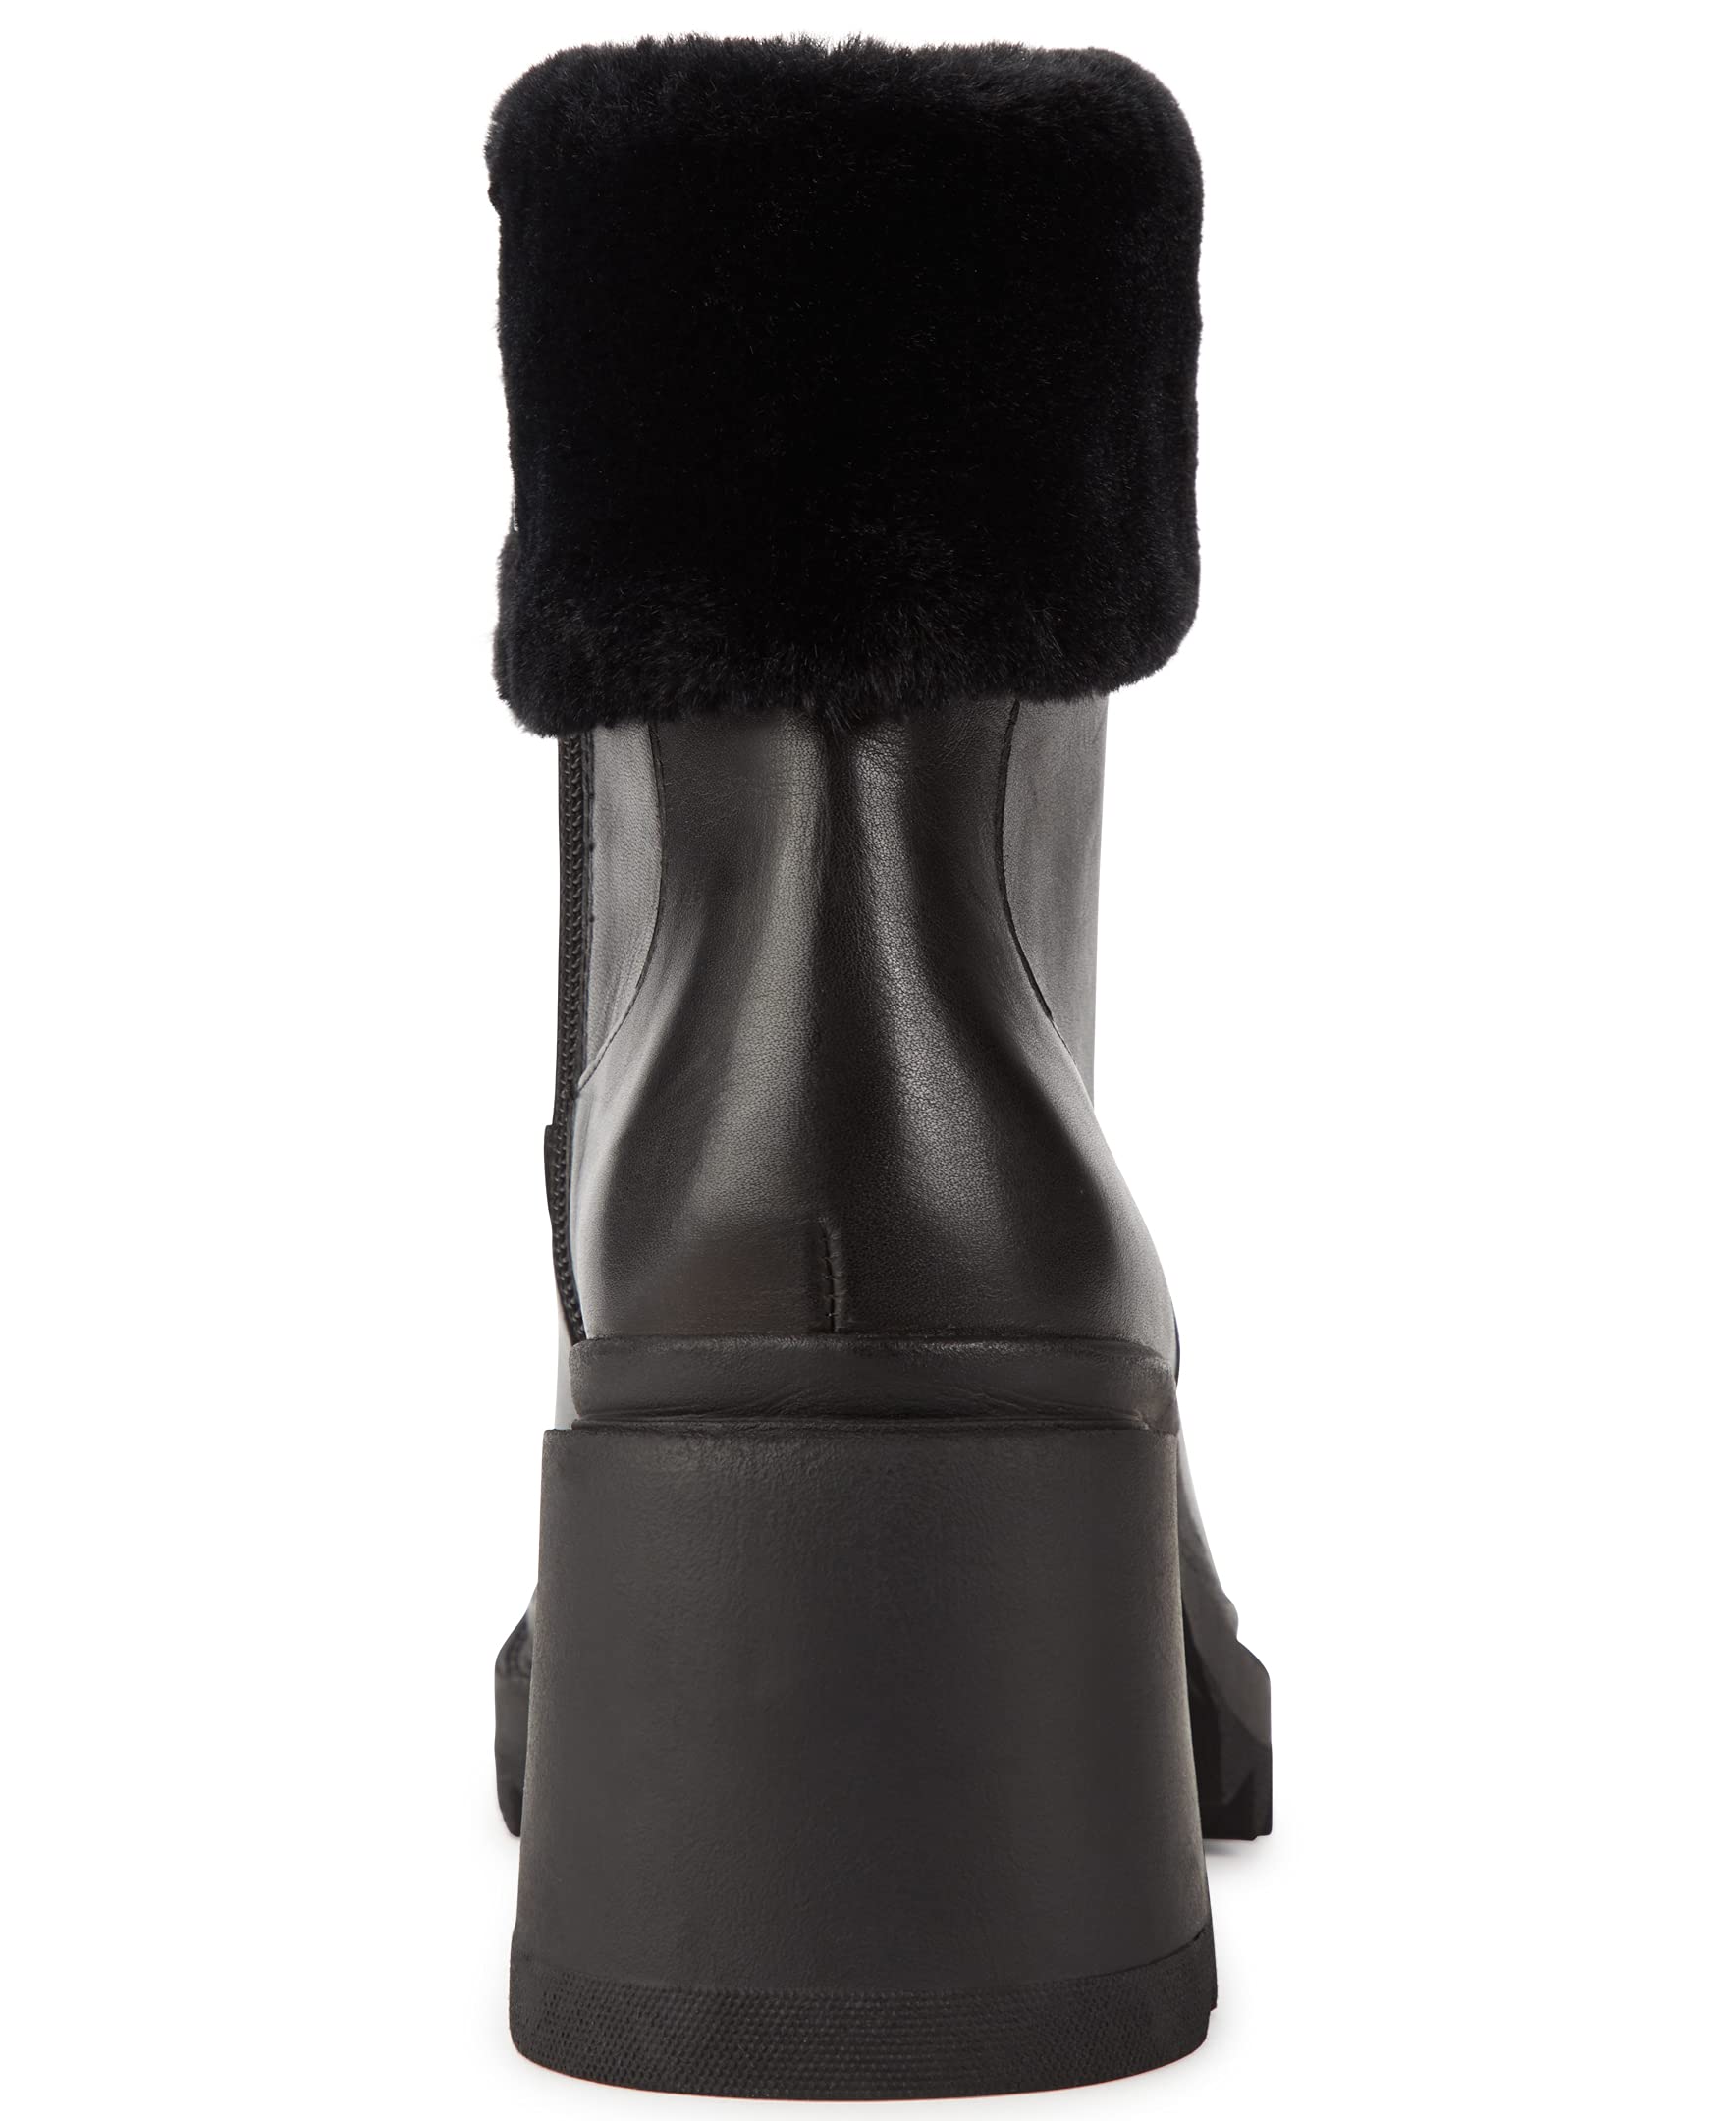 Karl Lagerfeld Paris Women's Carey Fashion Boot